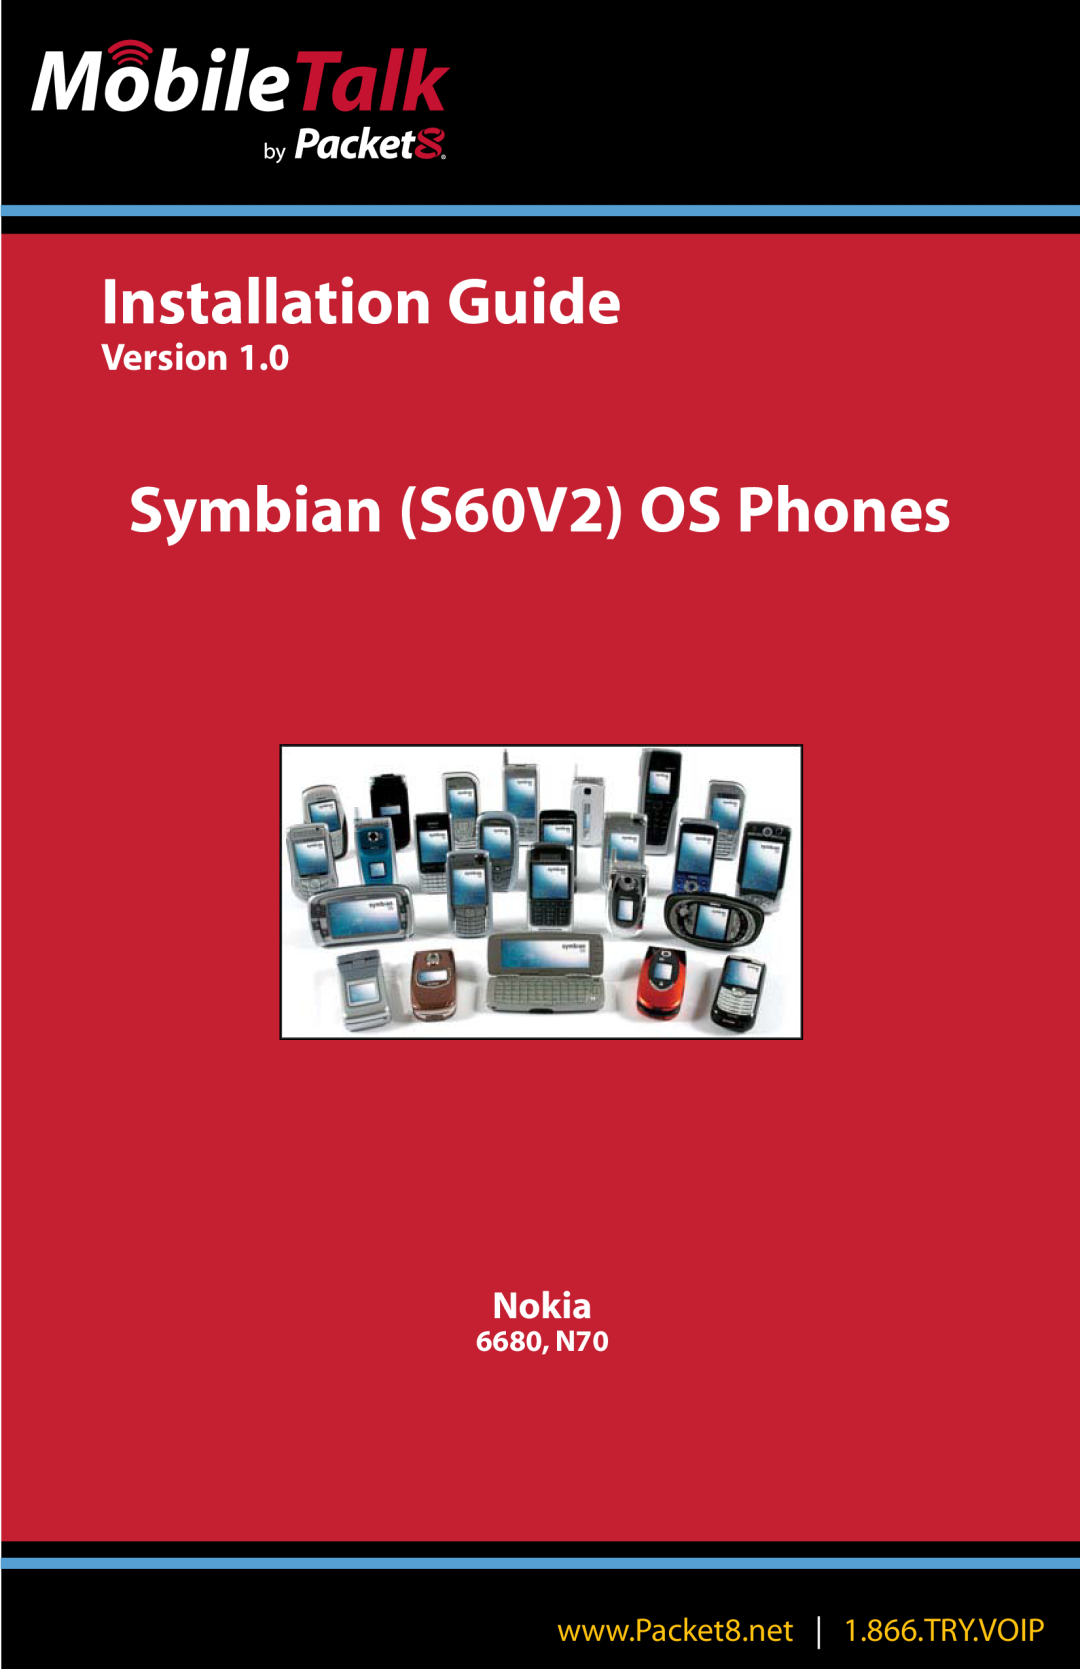 Nokia manual Installation Guide, Symbian S60V2 OS Phones, Version, Nokia, 6680, N70 